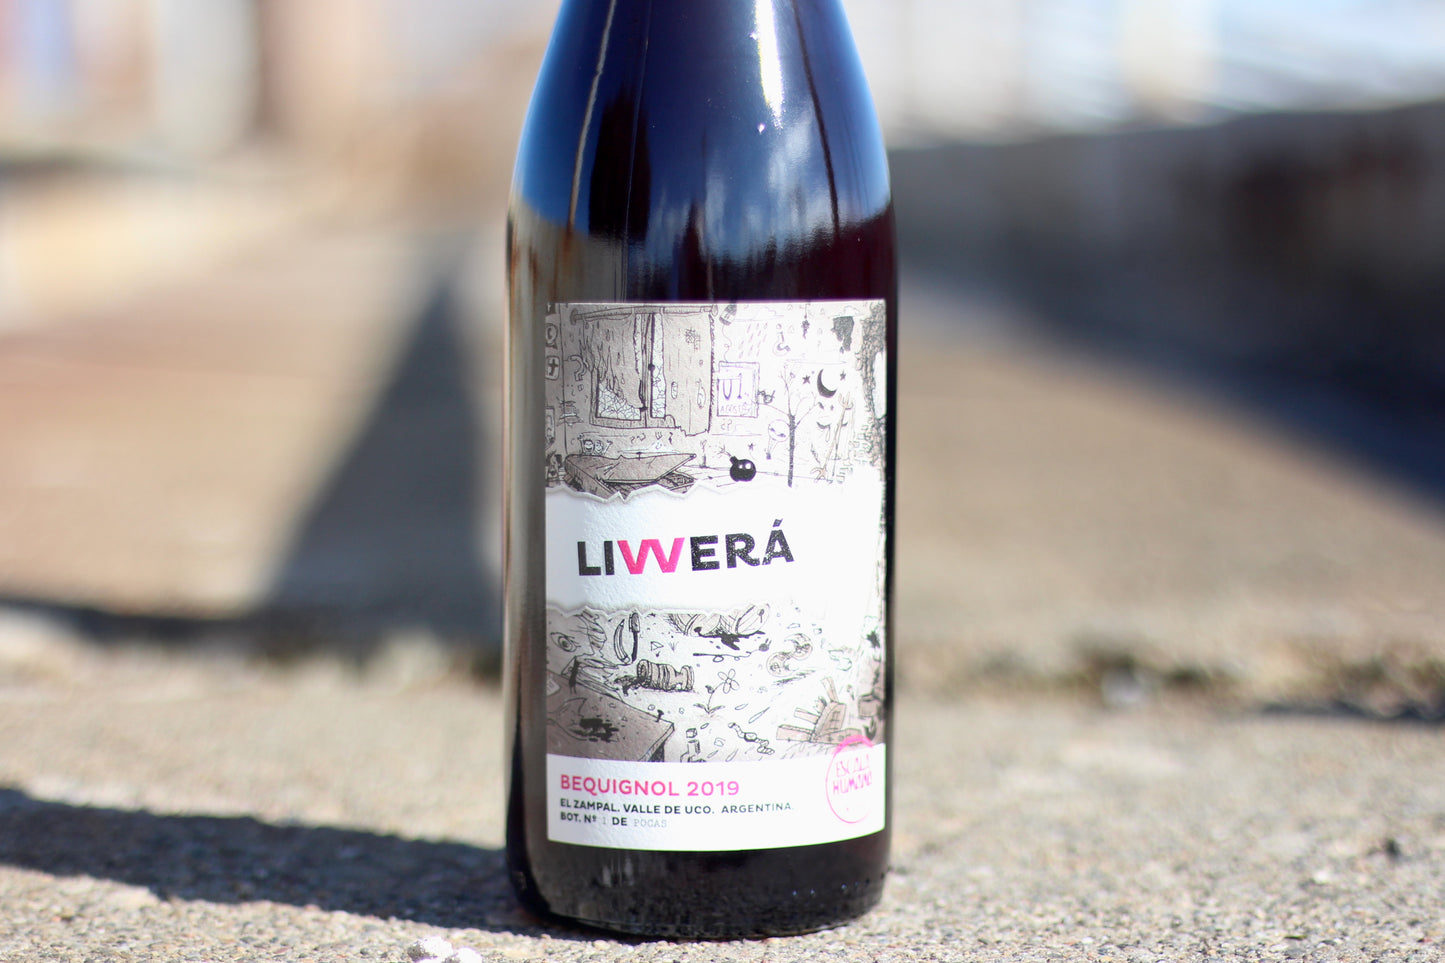 2019 Escala Humana "Livvera" Bequignol Tinto - Rock Juice Inc